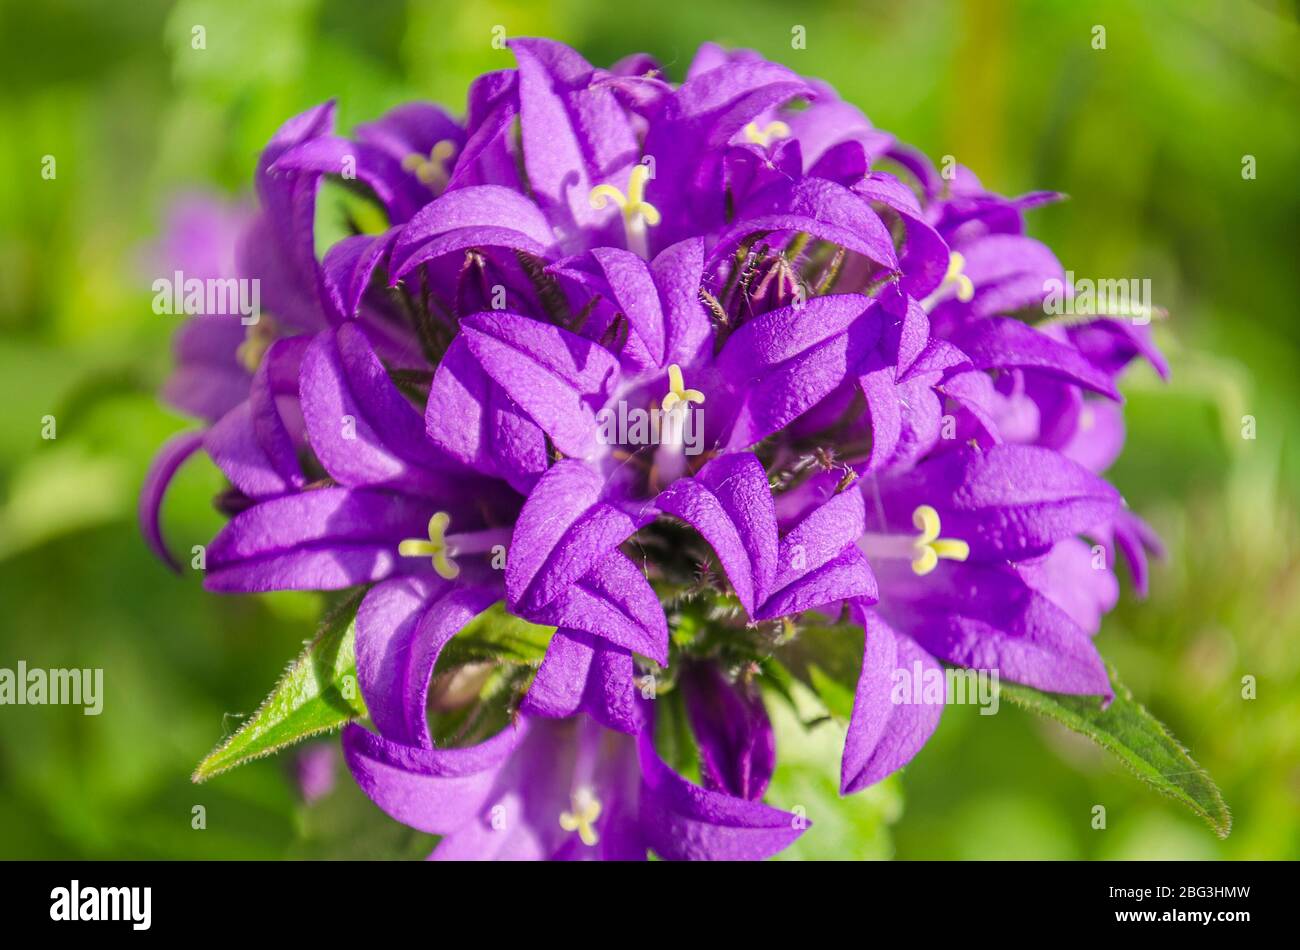 Purple bells in the garden. The beetle on the purple flower Stock Photo